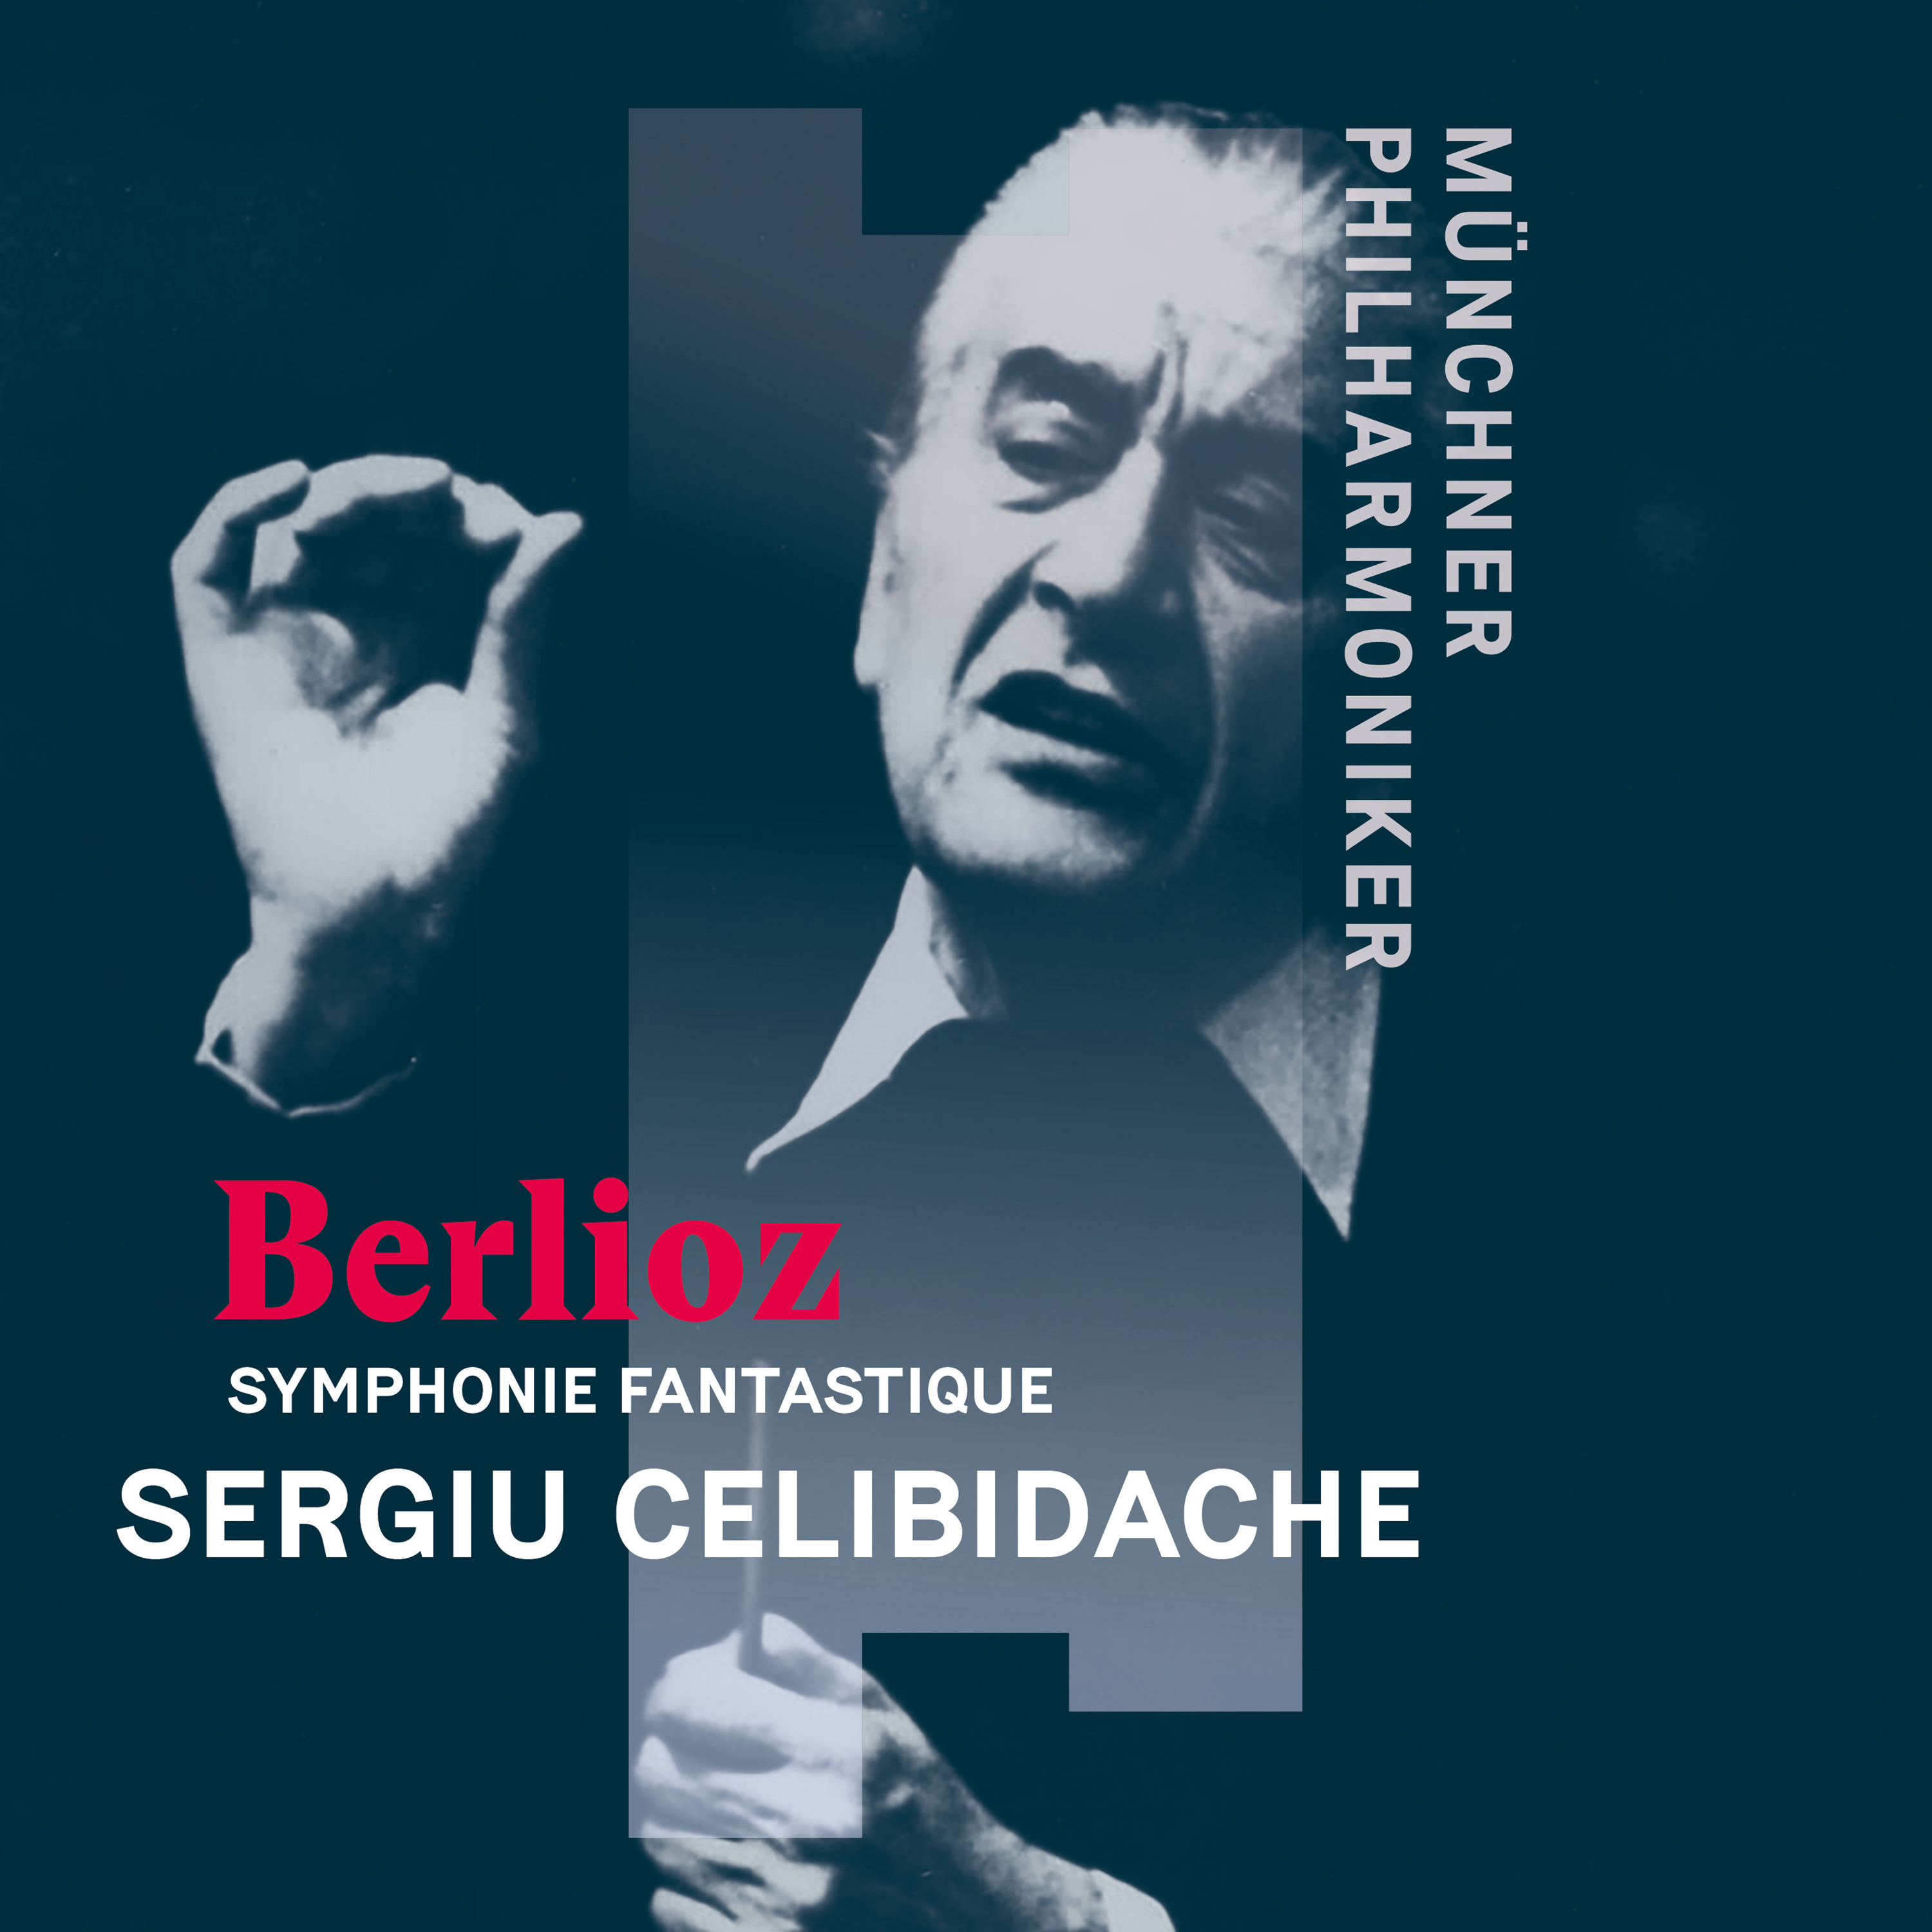 Munchner Philharmoniker, Sergiu Celibidache - Berlioz Symphonie fantastique, H. 48, Op. 14 (2020) [FLAC 24bit/96kHz]